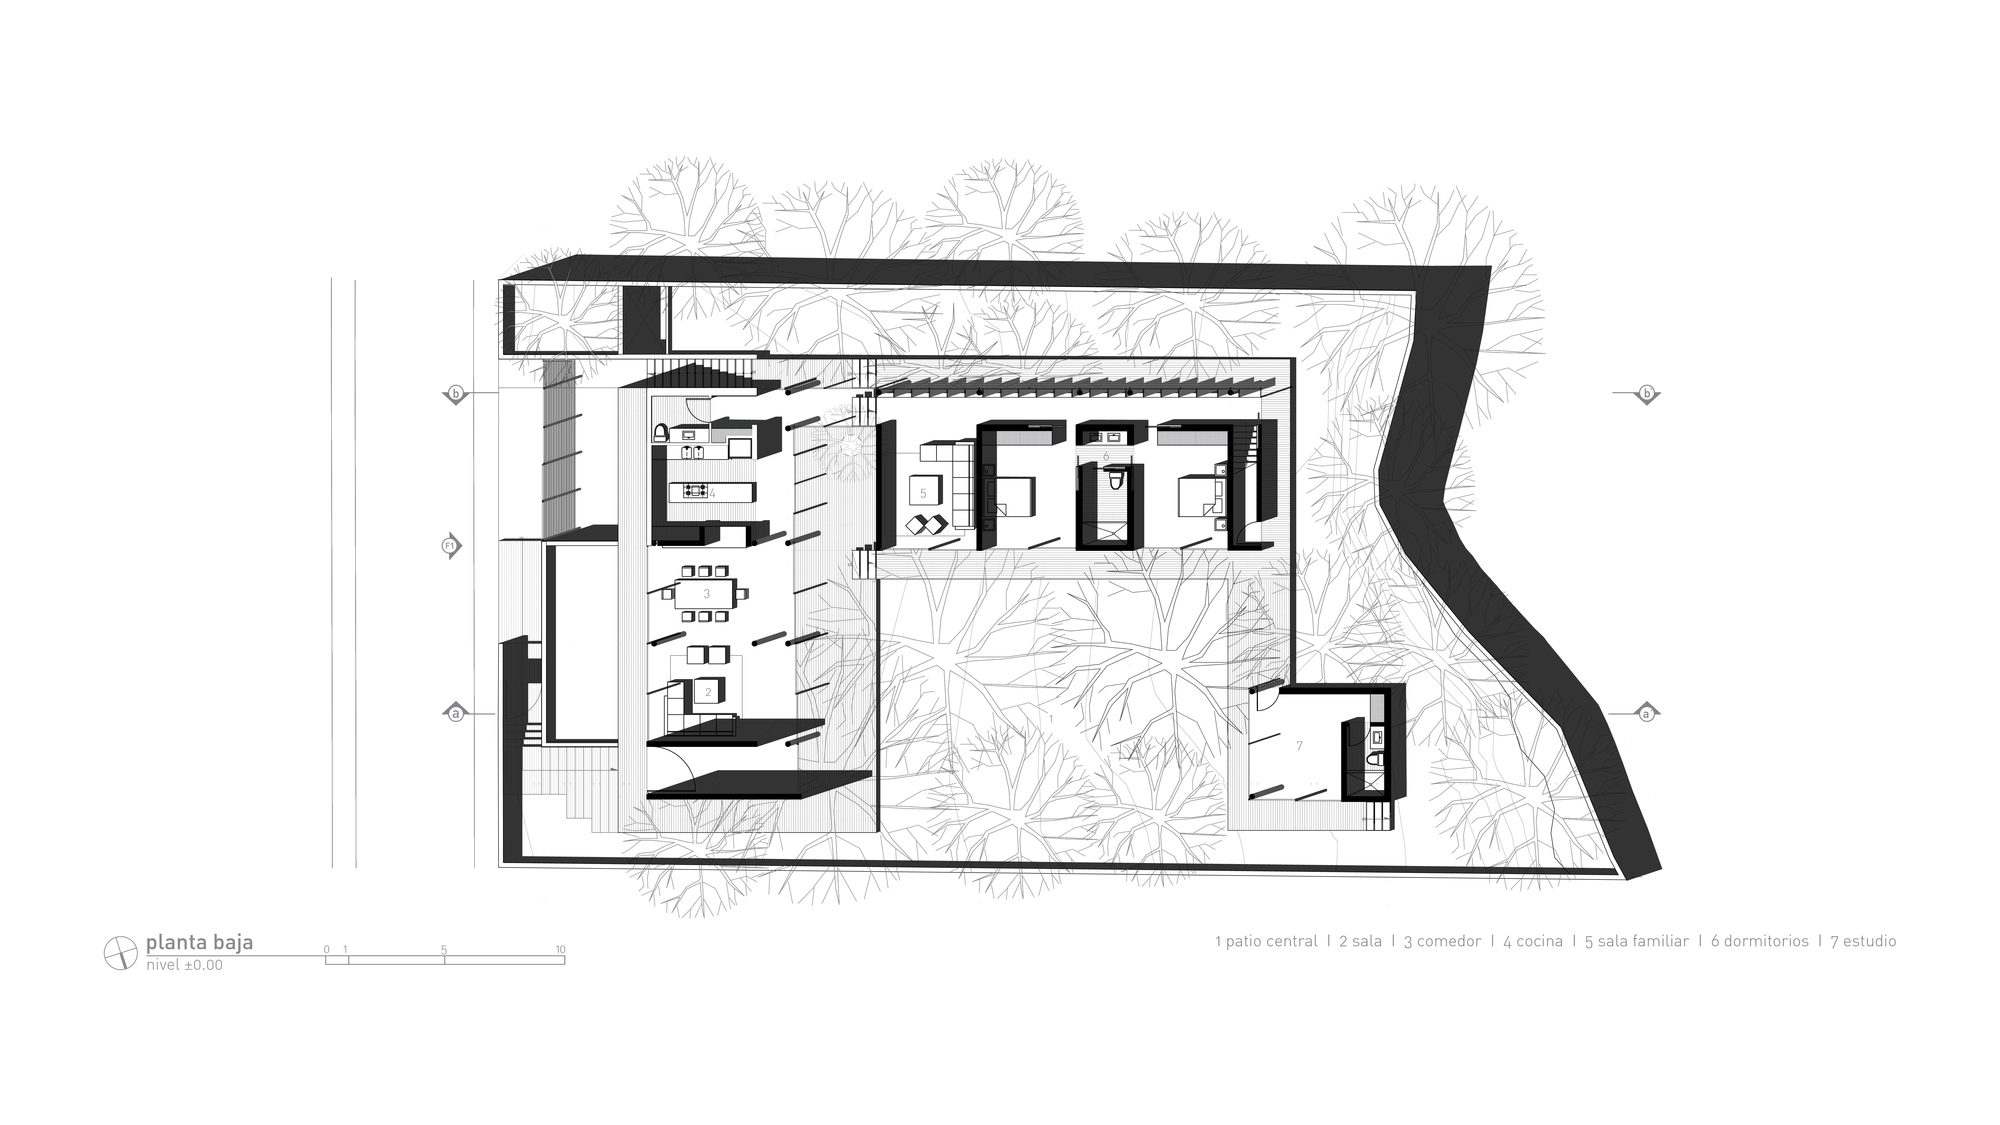 Роскошный дом на лоне природы в Кито, Эквадор от бюро Gabriel Rivera Arquitectos, HQ architecture, HQarch, HQ arch, high quality architecture